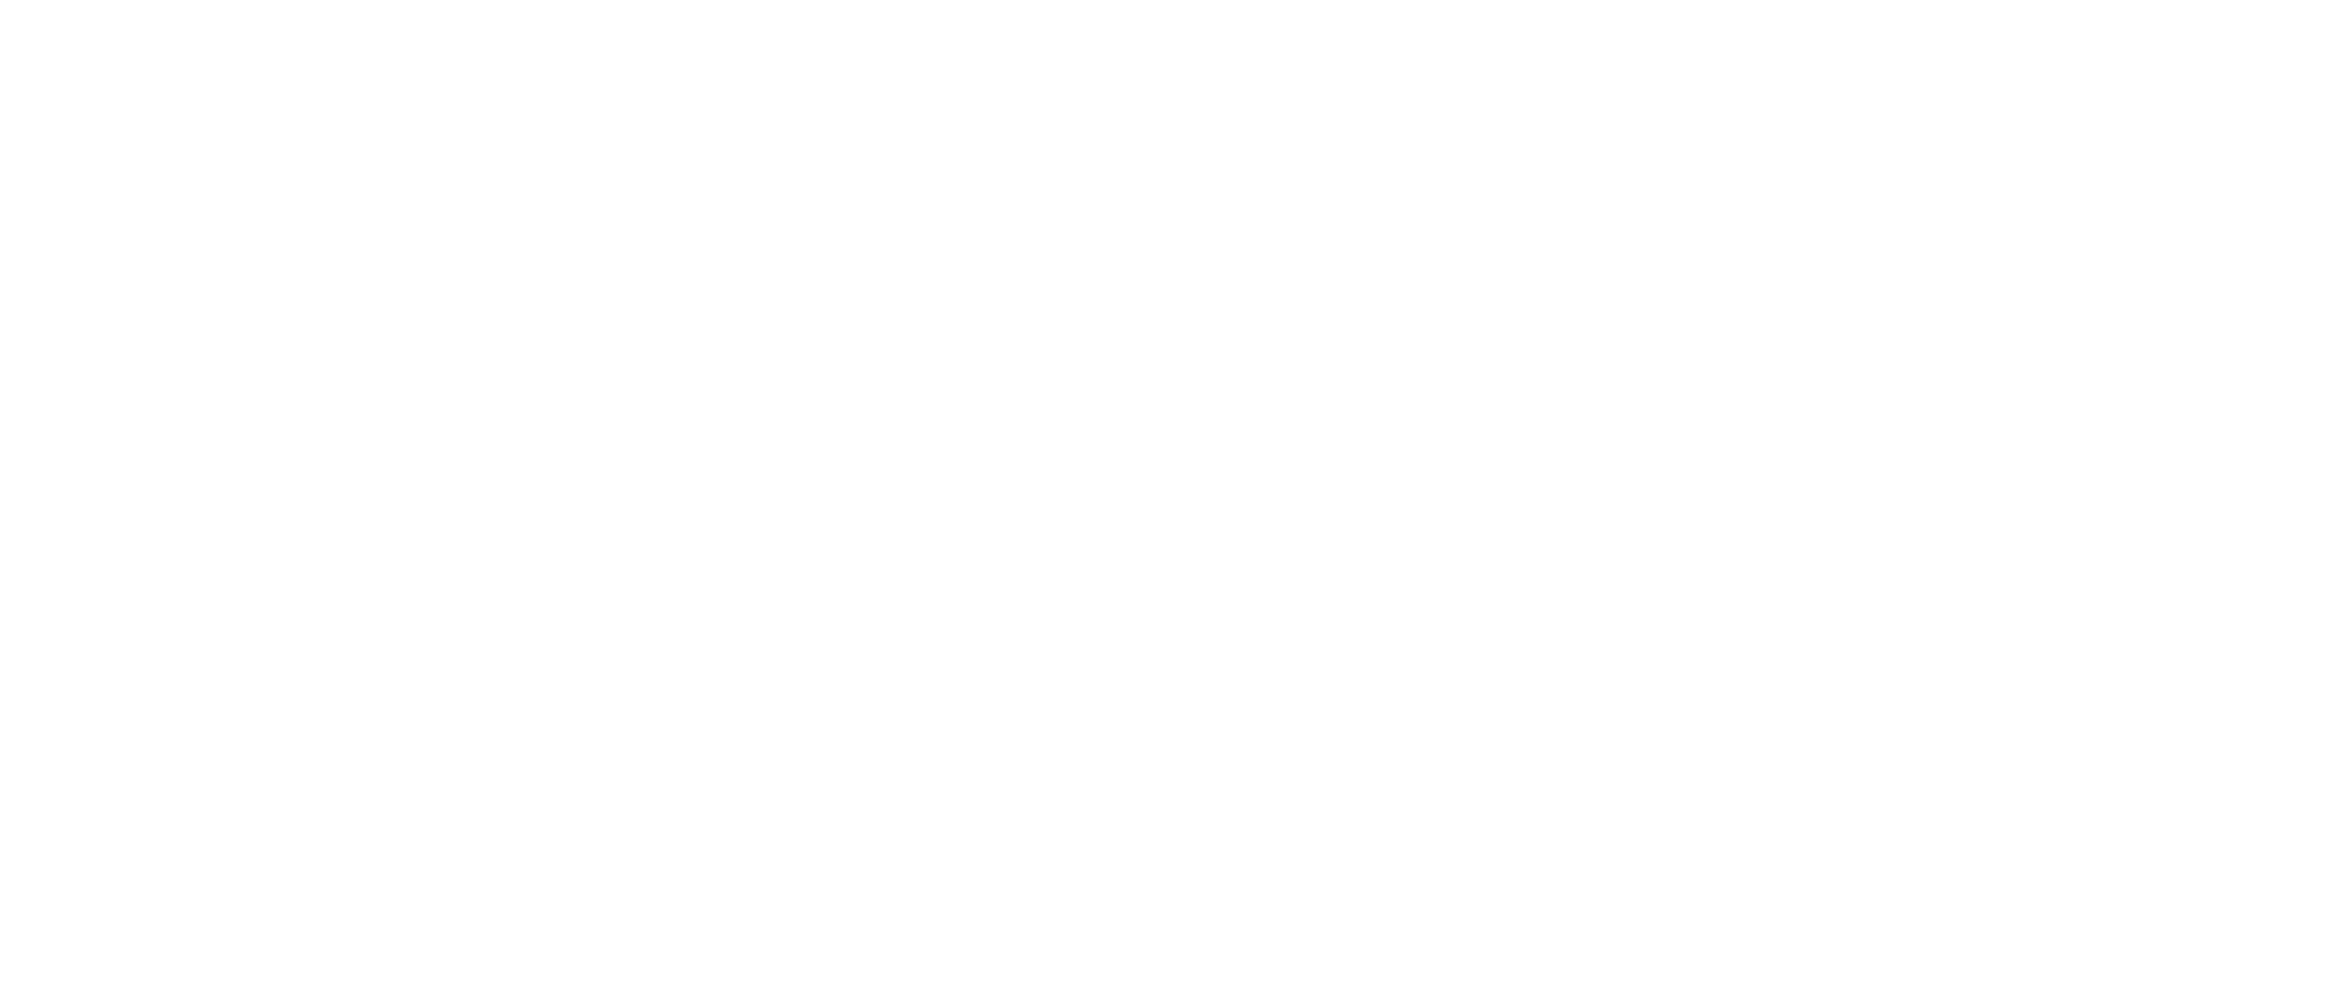 Le Motel